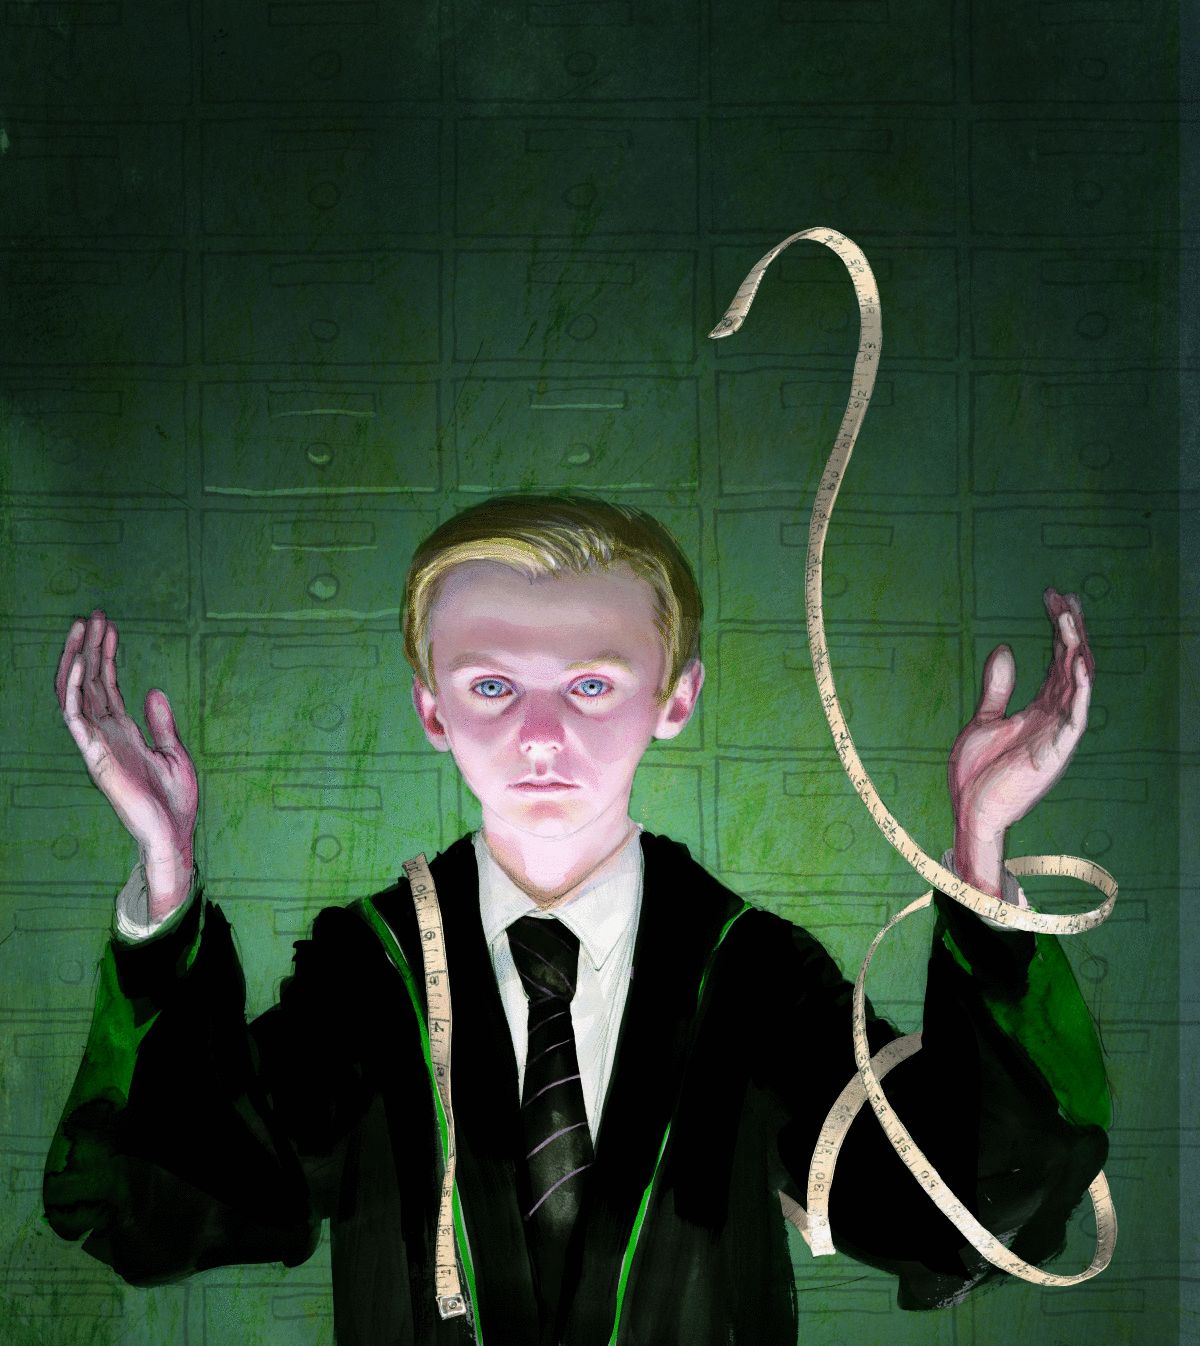 New Harry Potter character art